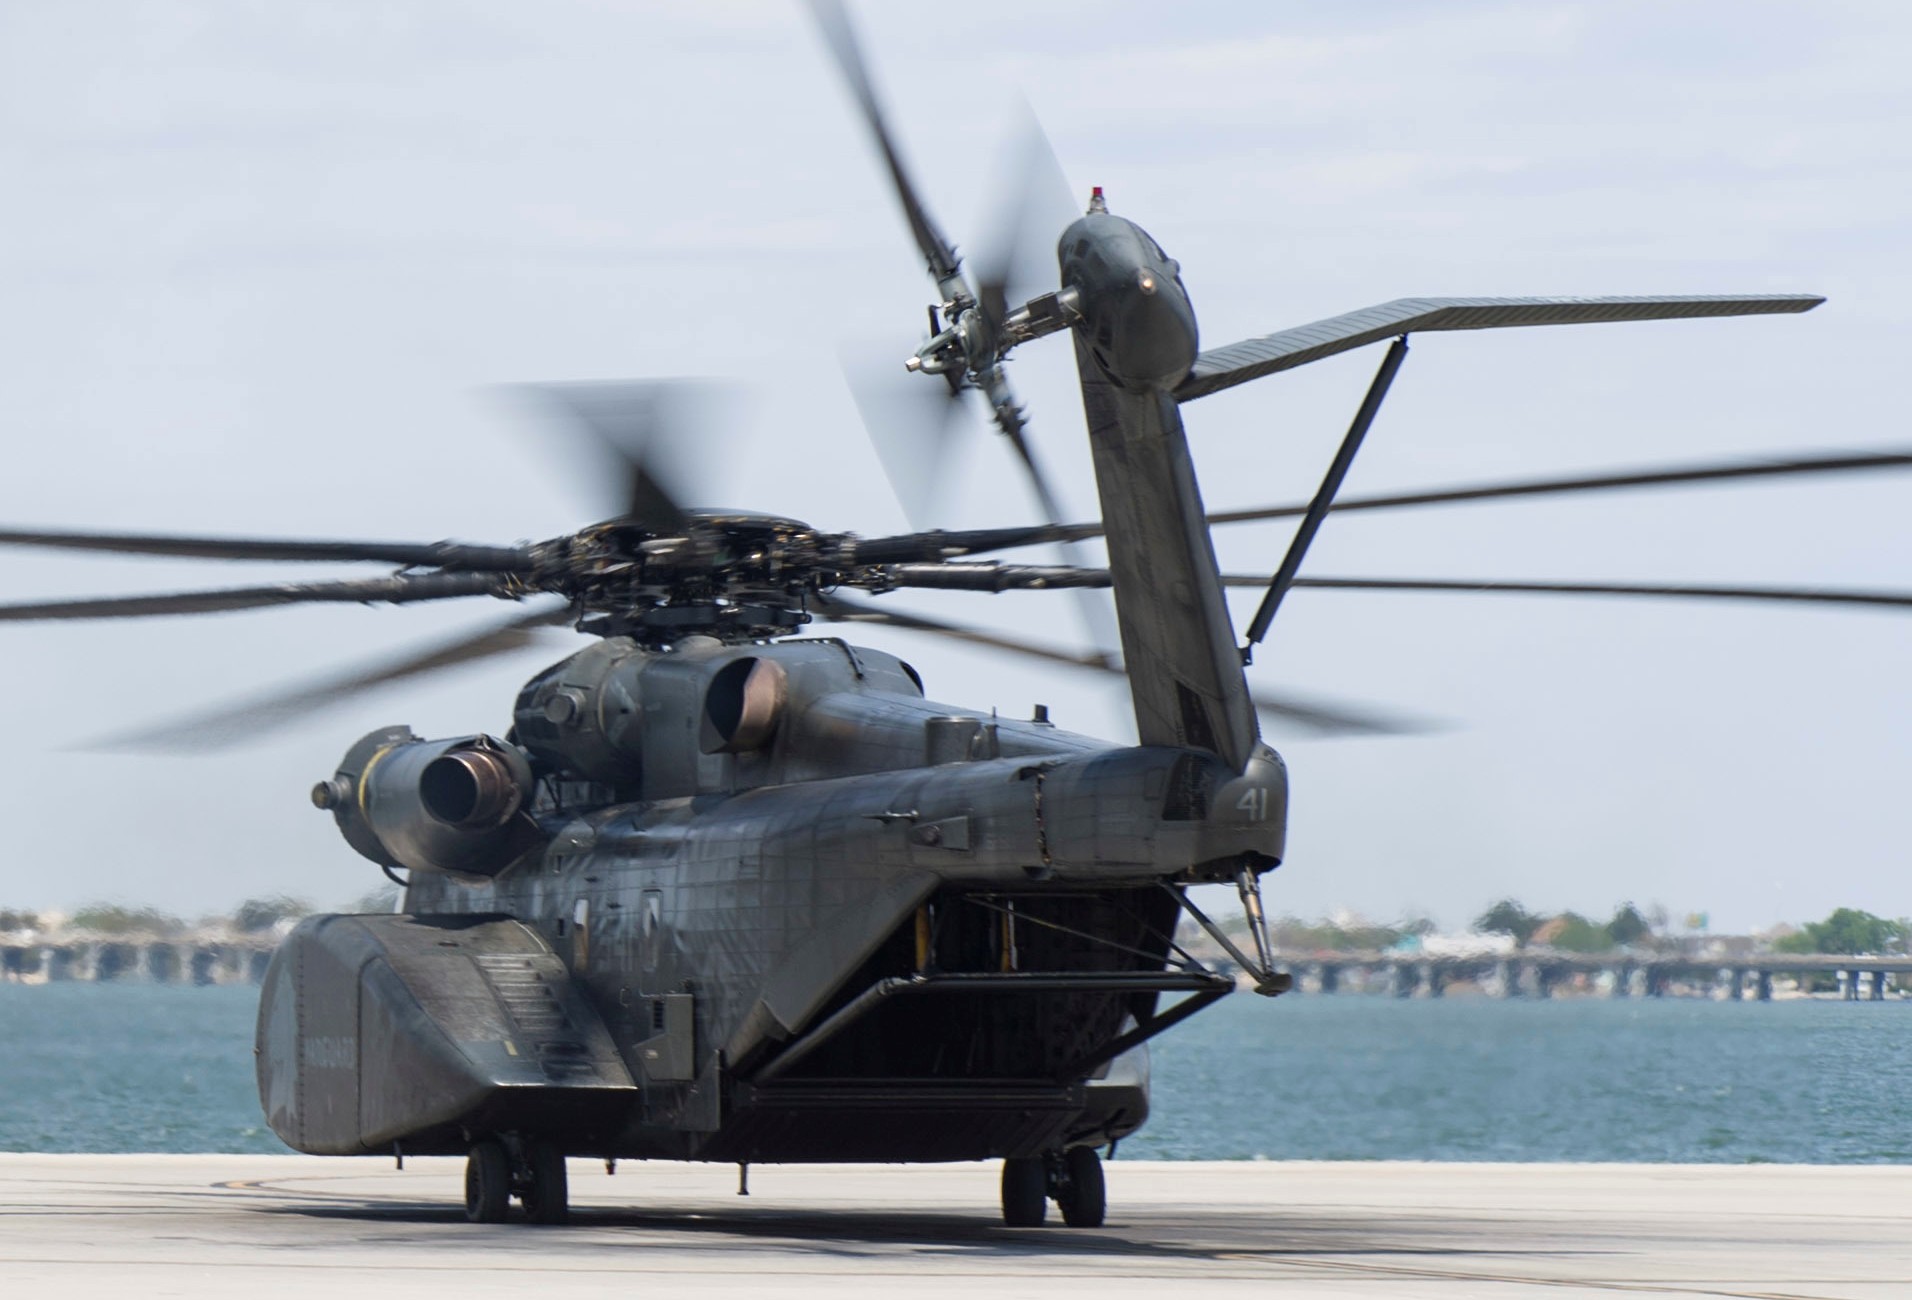 hm-14 vanguard helicopter mine countermeasures squadron navy mh-53e sea dragon 19